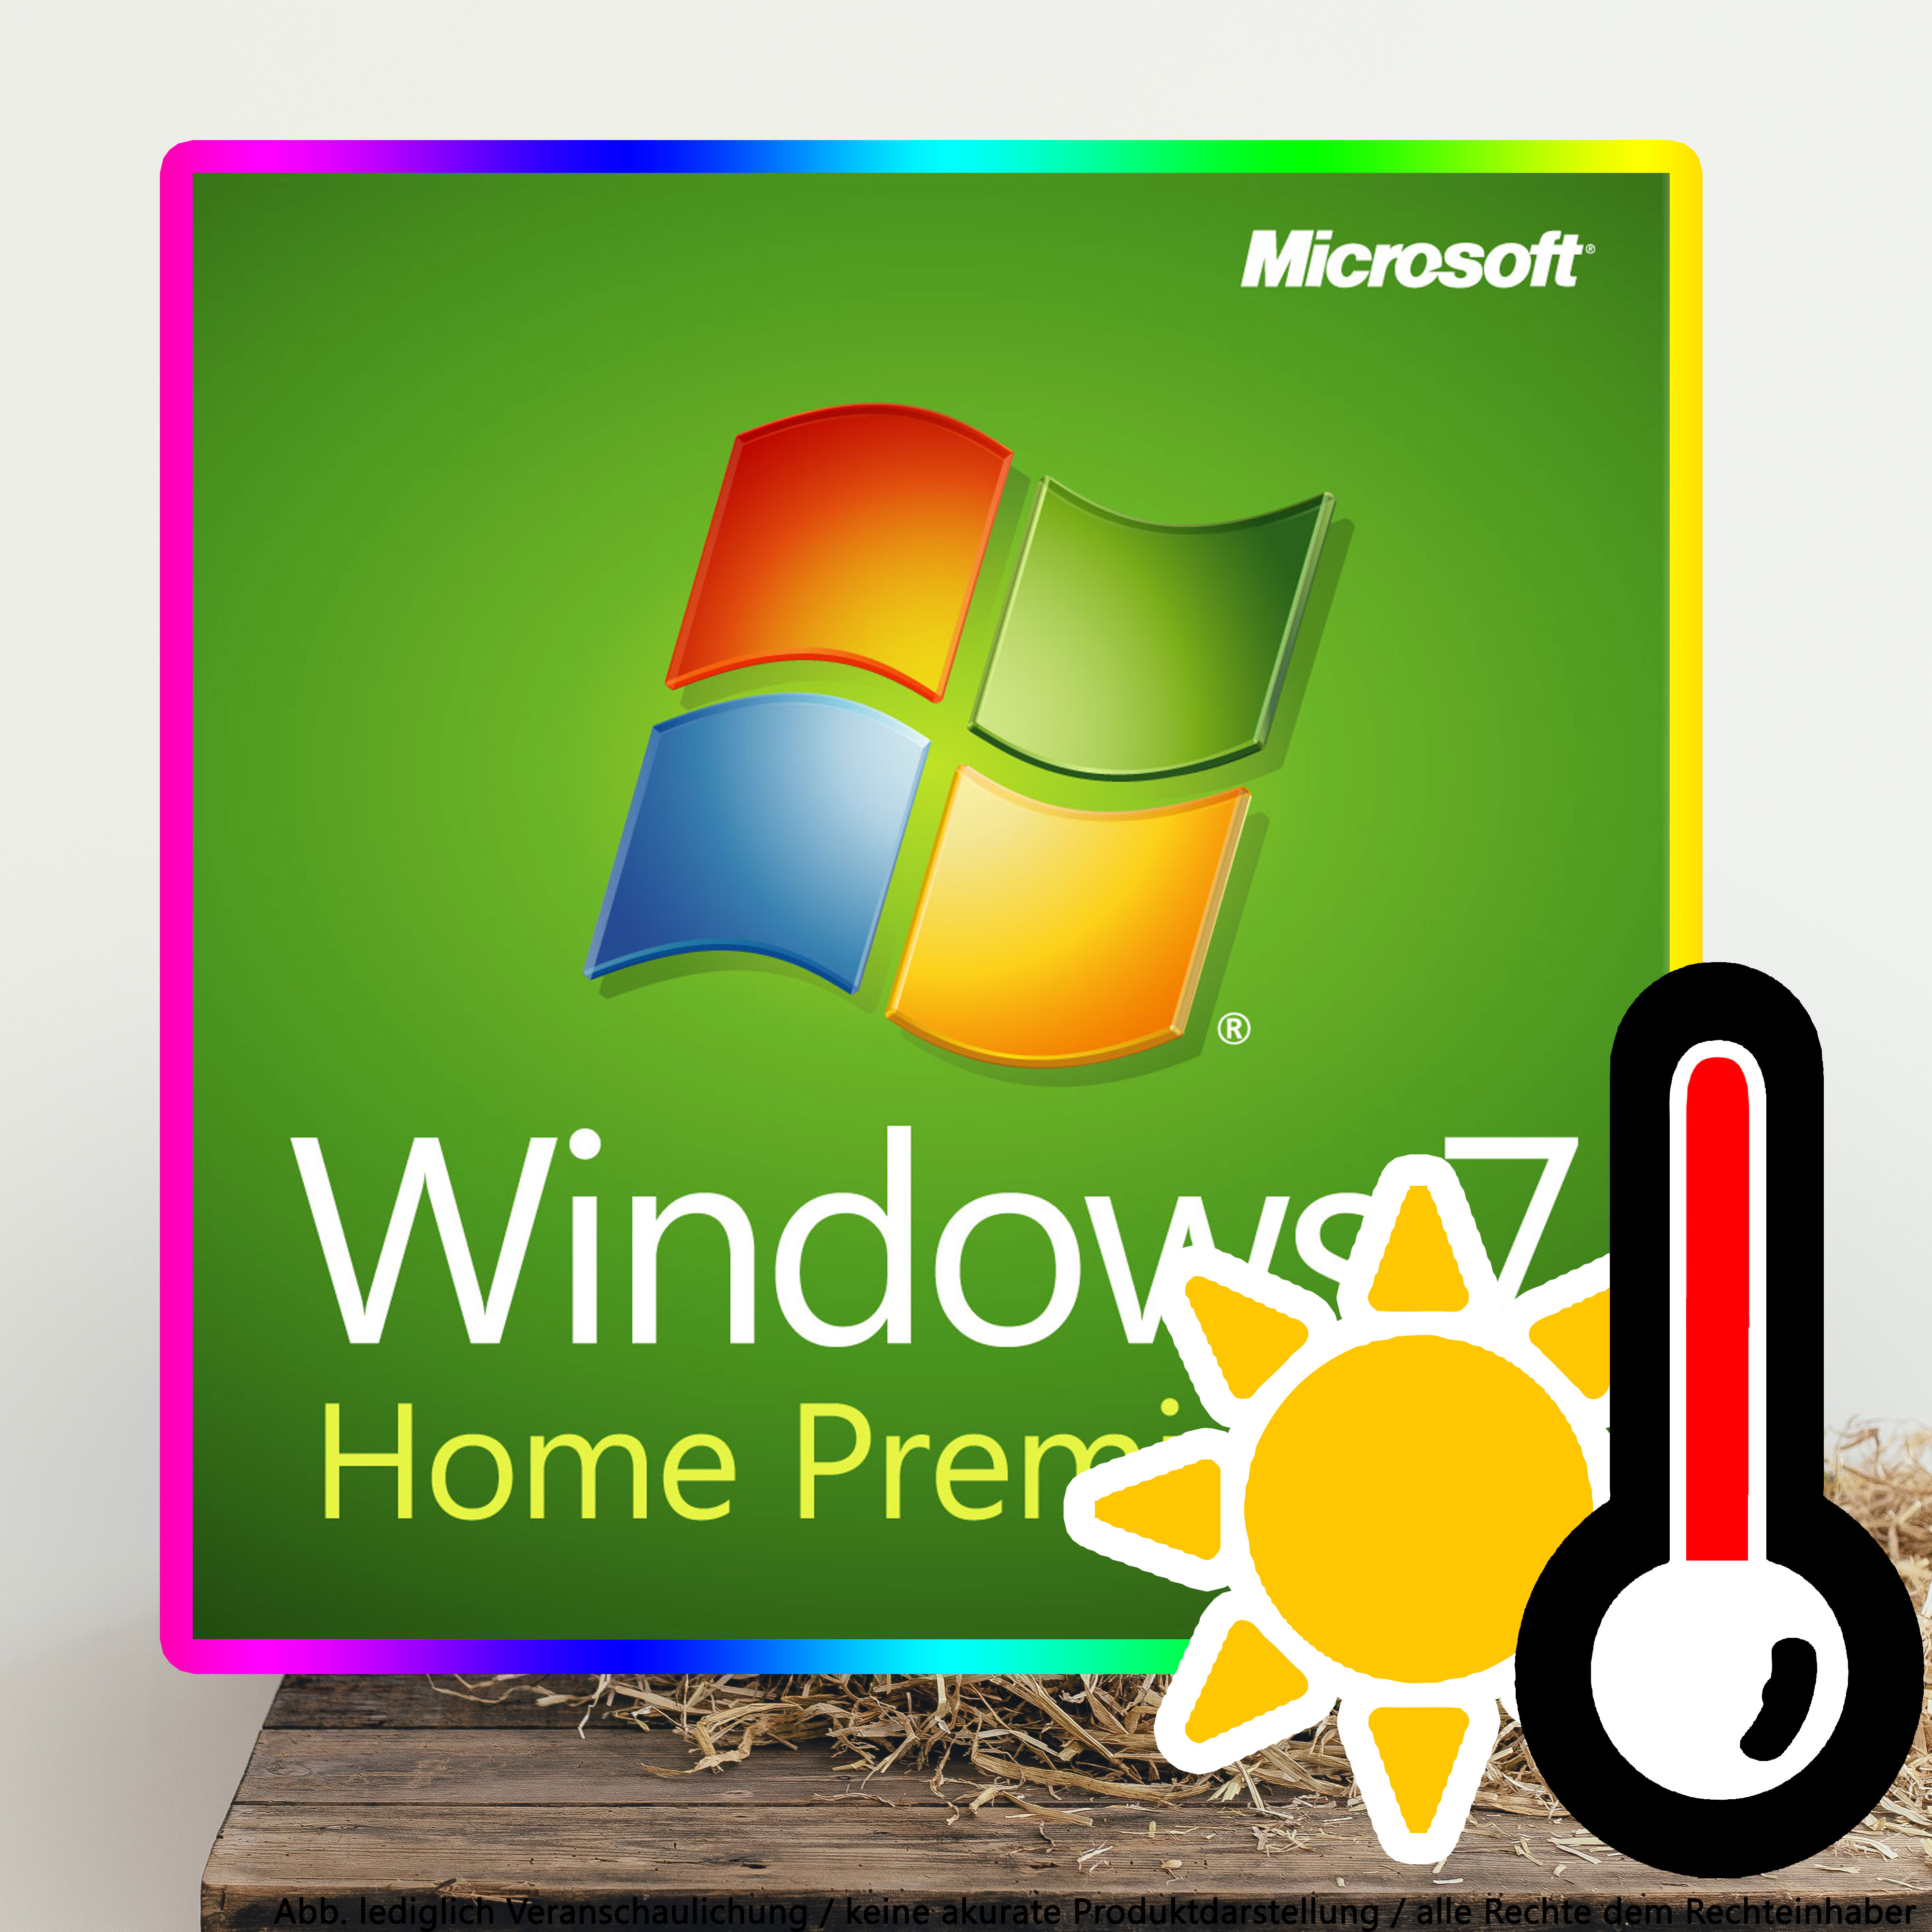 windows 7 home premium 32 bit iso file download